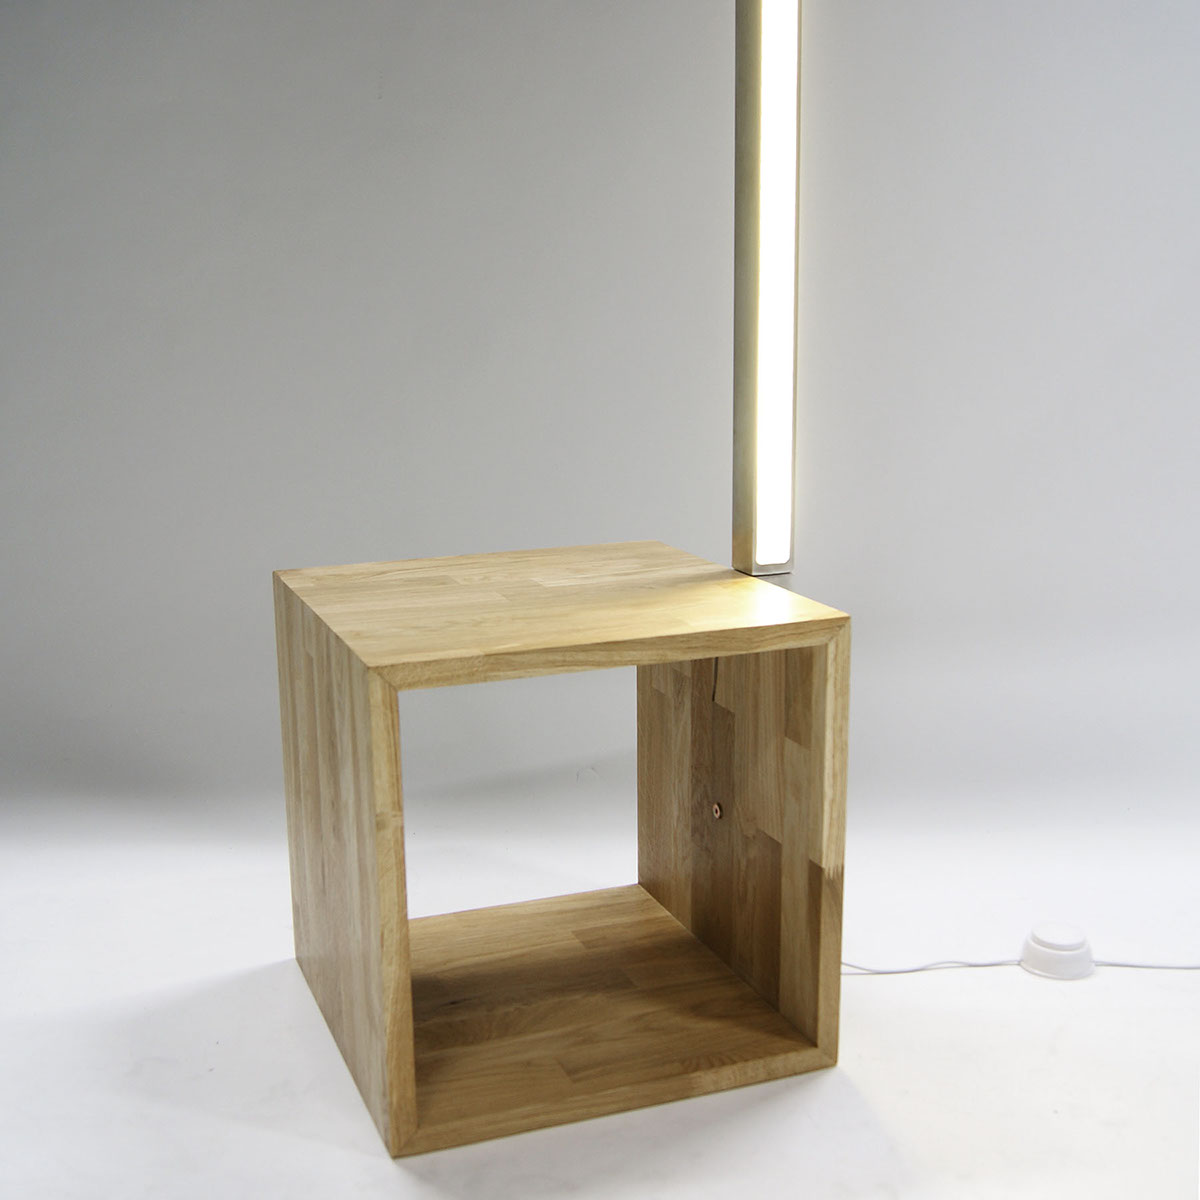 Lamp mutifunctional table stool led light Interior oak aliuminiom rotating 90degrees 360degrees reflecting floor lamp